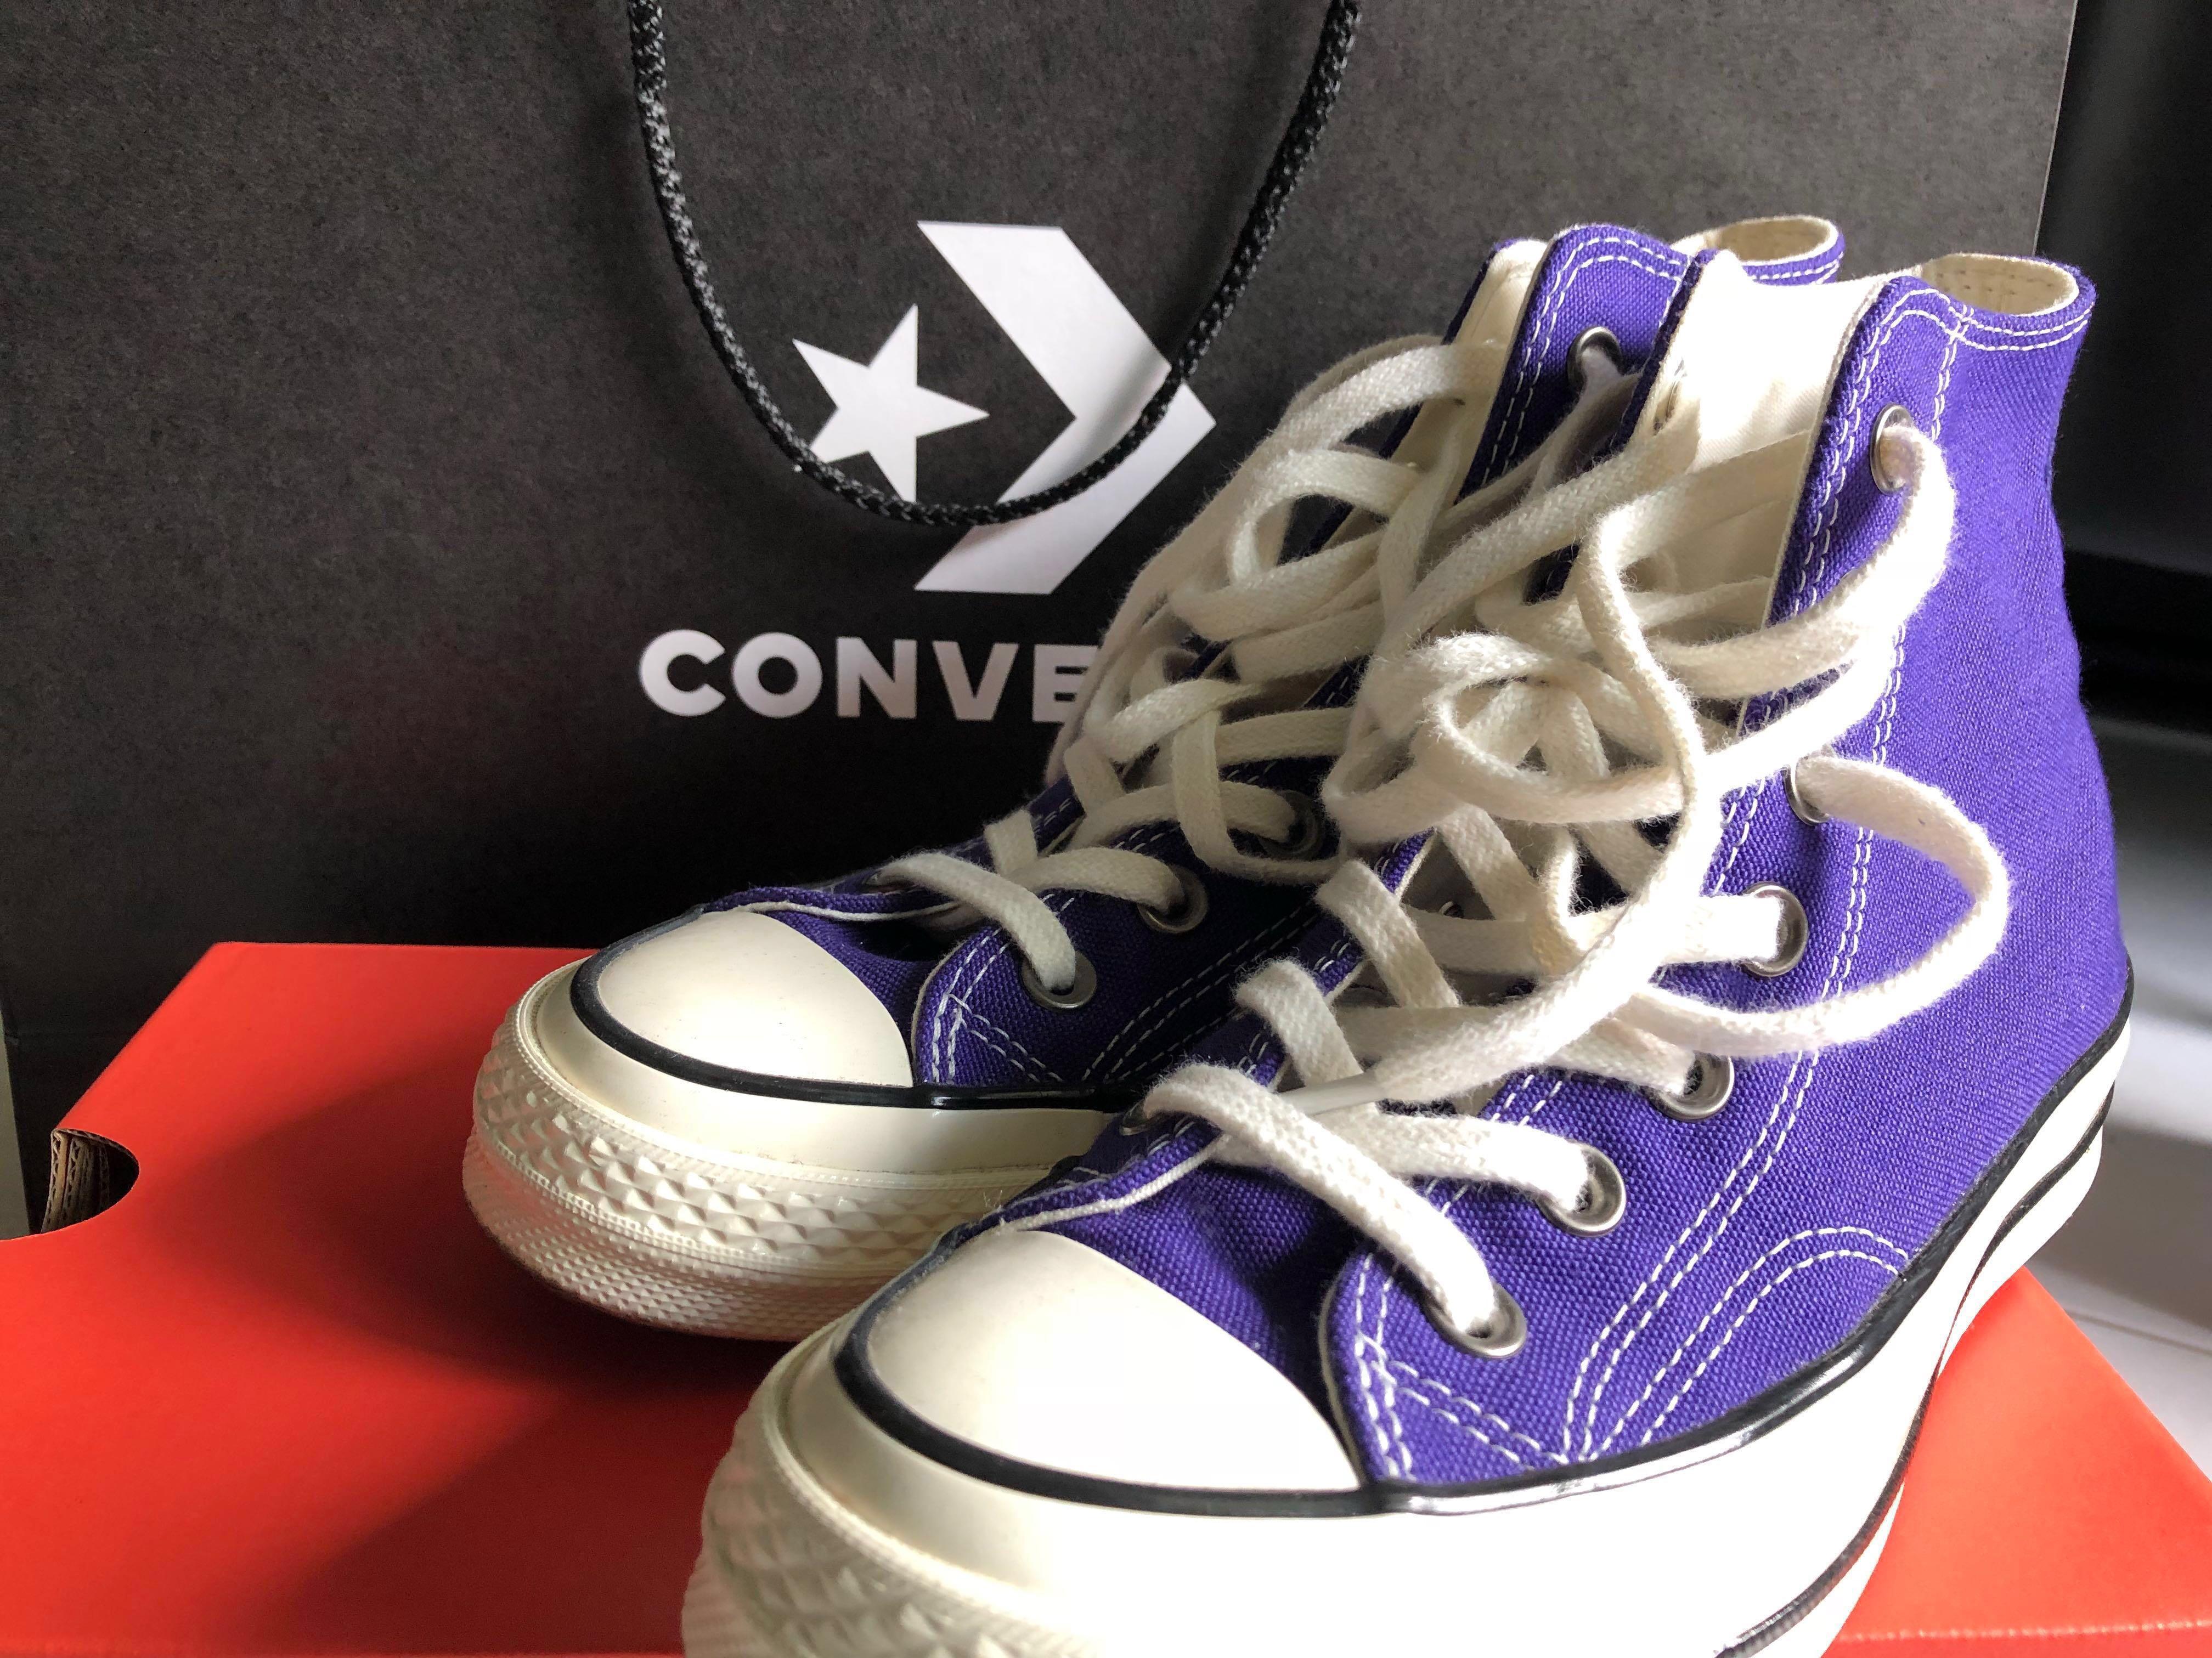 where can i buy purple converse